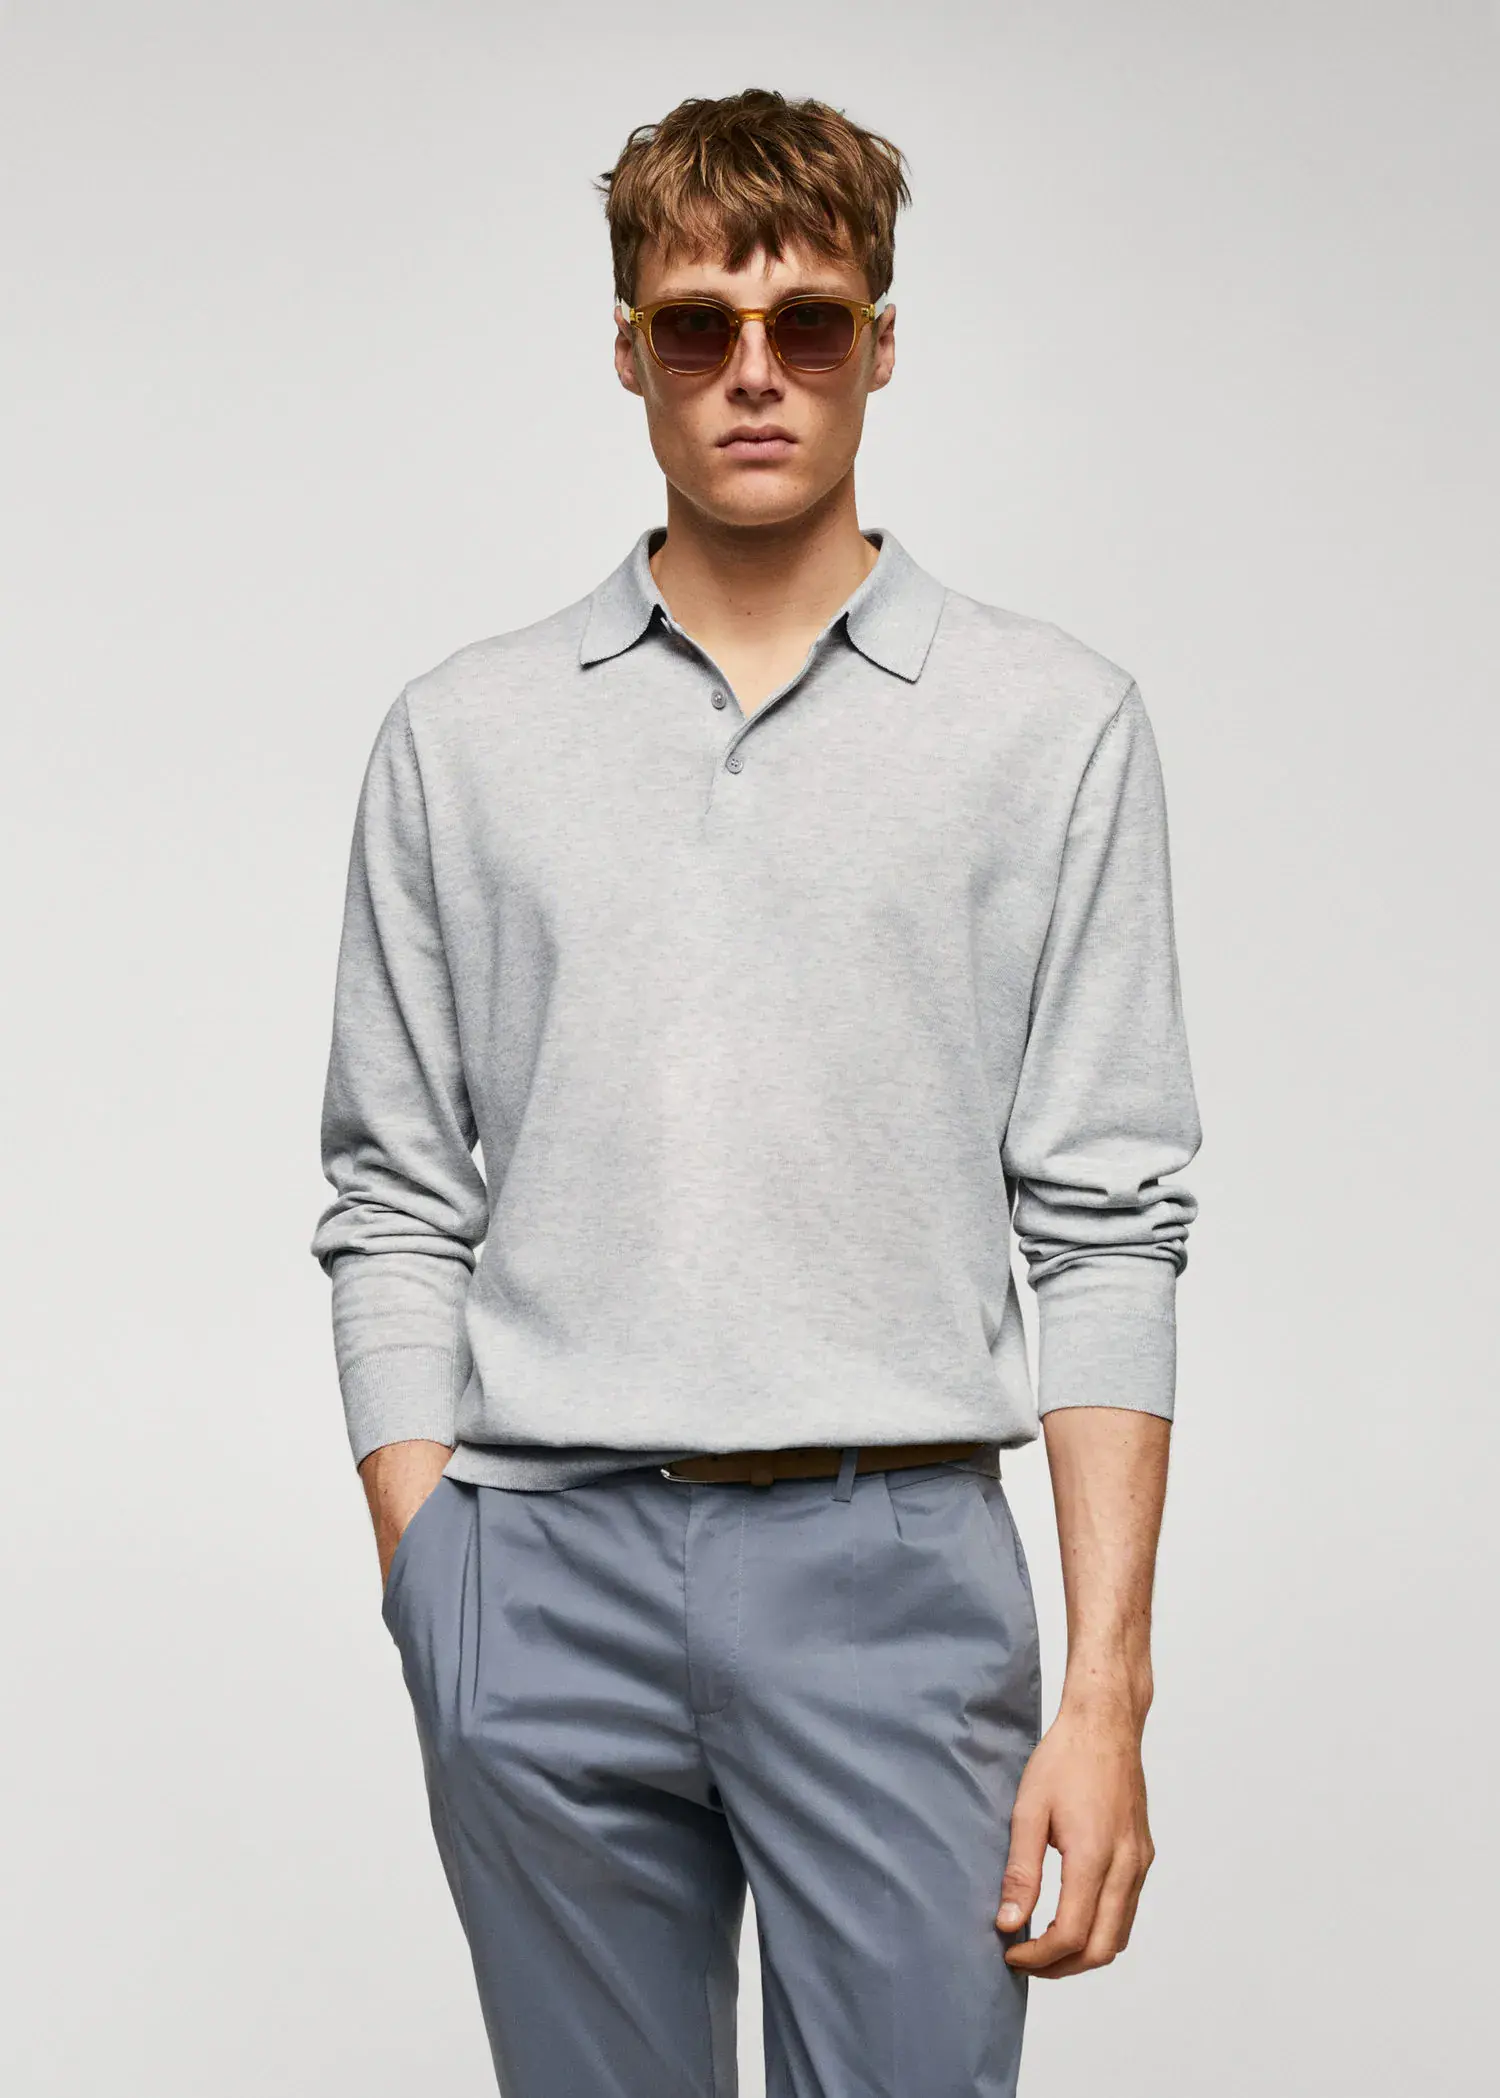 Mango Long-sleeved cotton jersey polo shirt. a man wearing a gray shirt and sunglasses. 